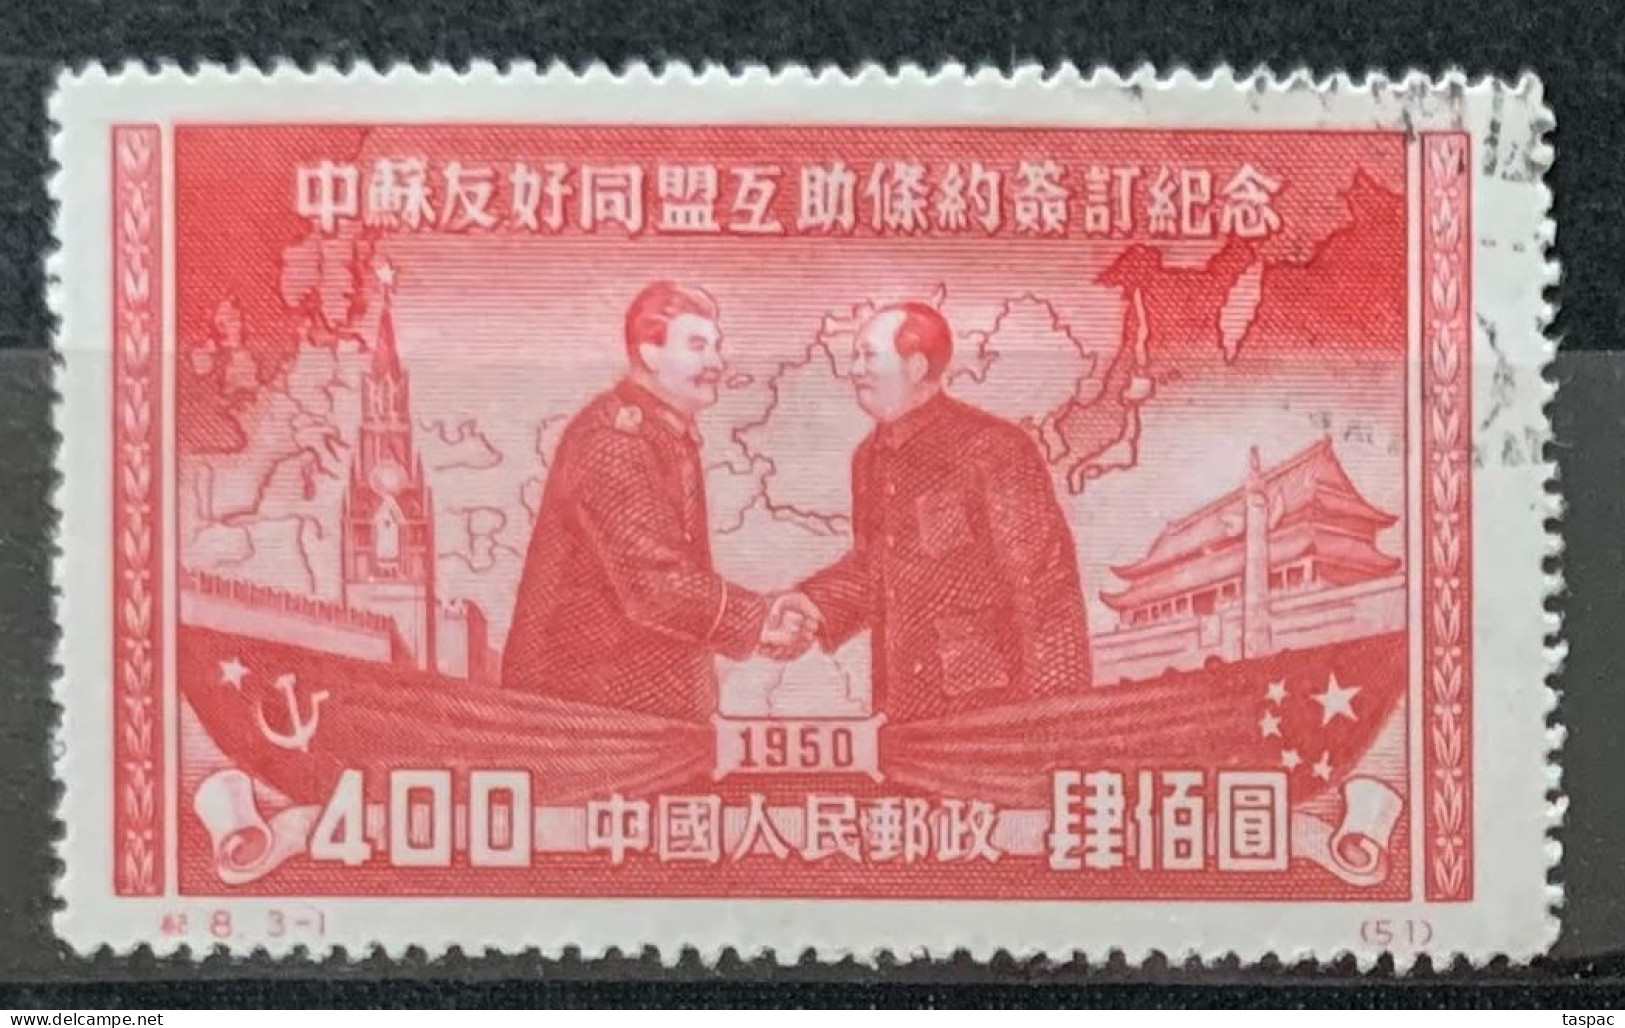 China P.R. 1950 Mi# 84 II Used - Short Set - Reprints - Stalin And Mao Tse-tung - Official Reprints